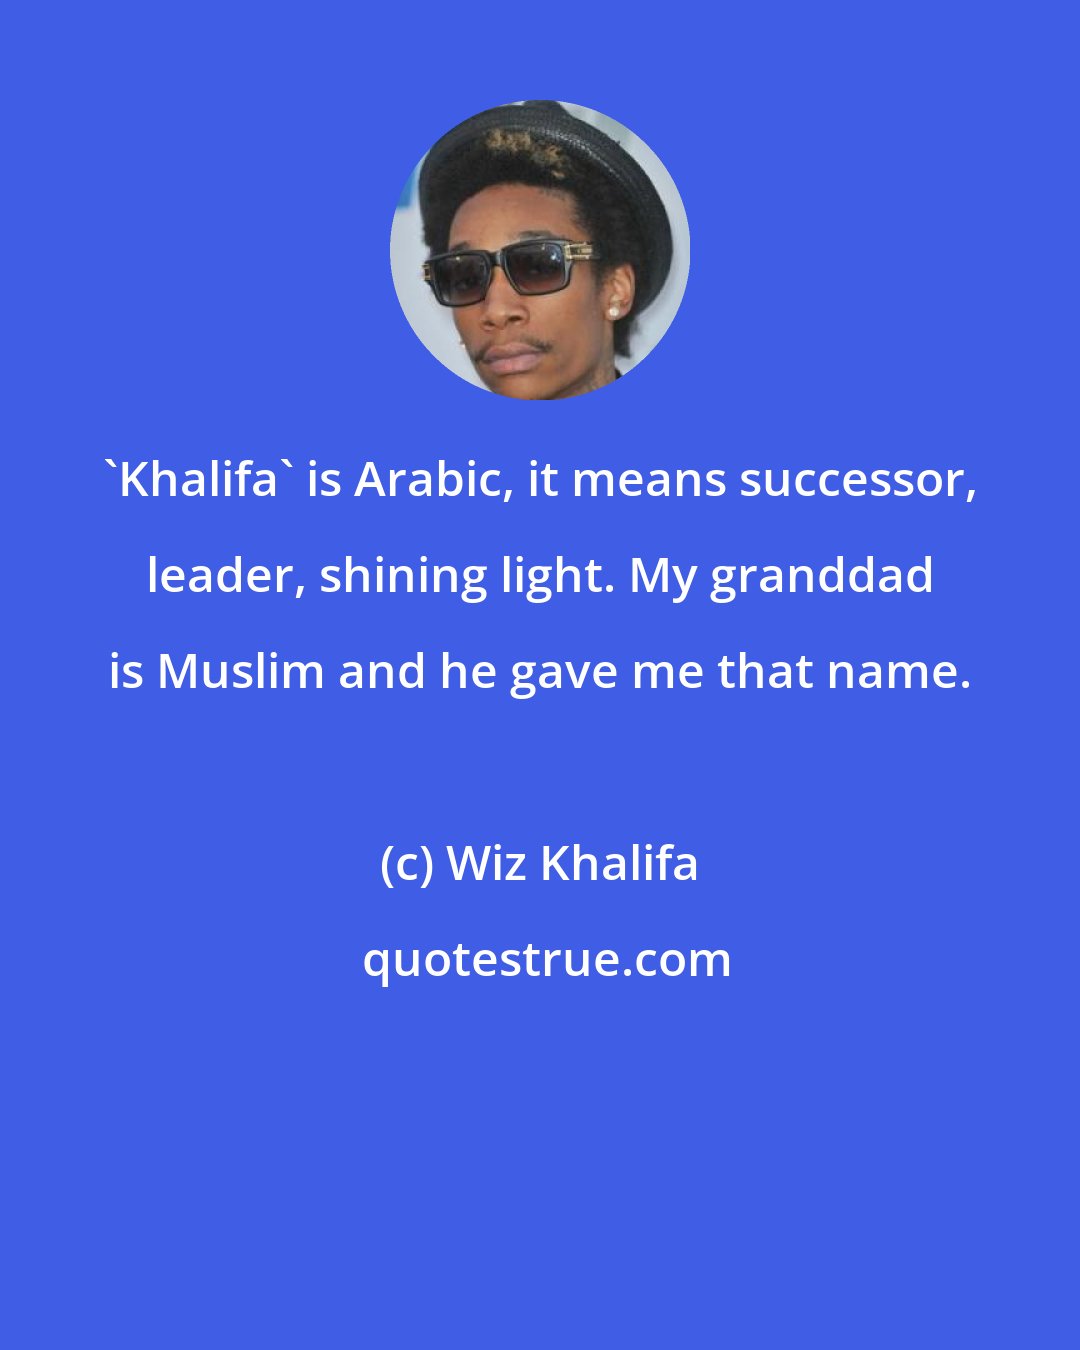 Wiz Khalifa: 'Khalifa' is Arabic, it means successor, leader, shining light. My granddad is Muslim and he gave me that name.